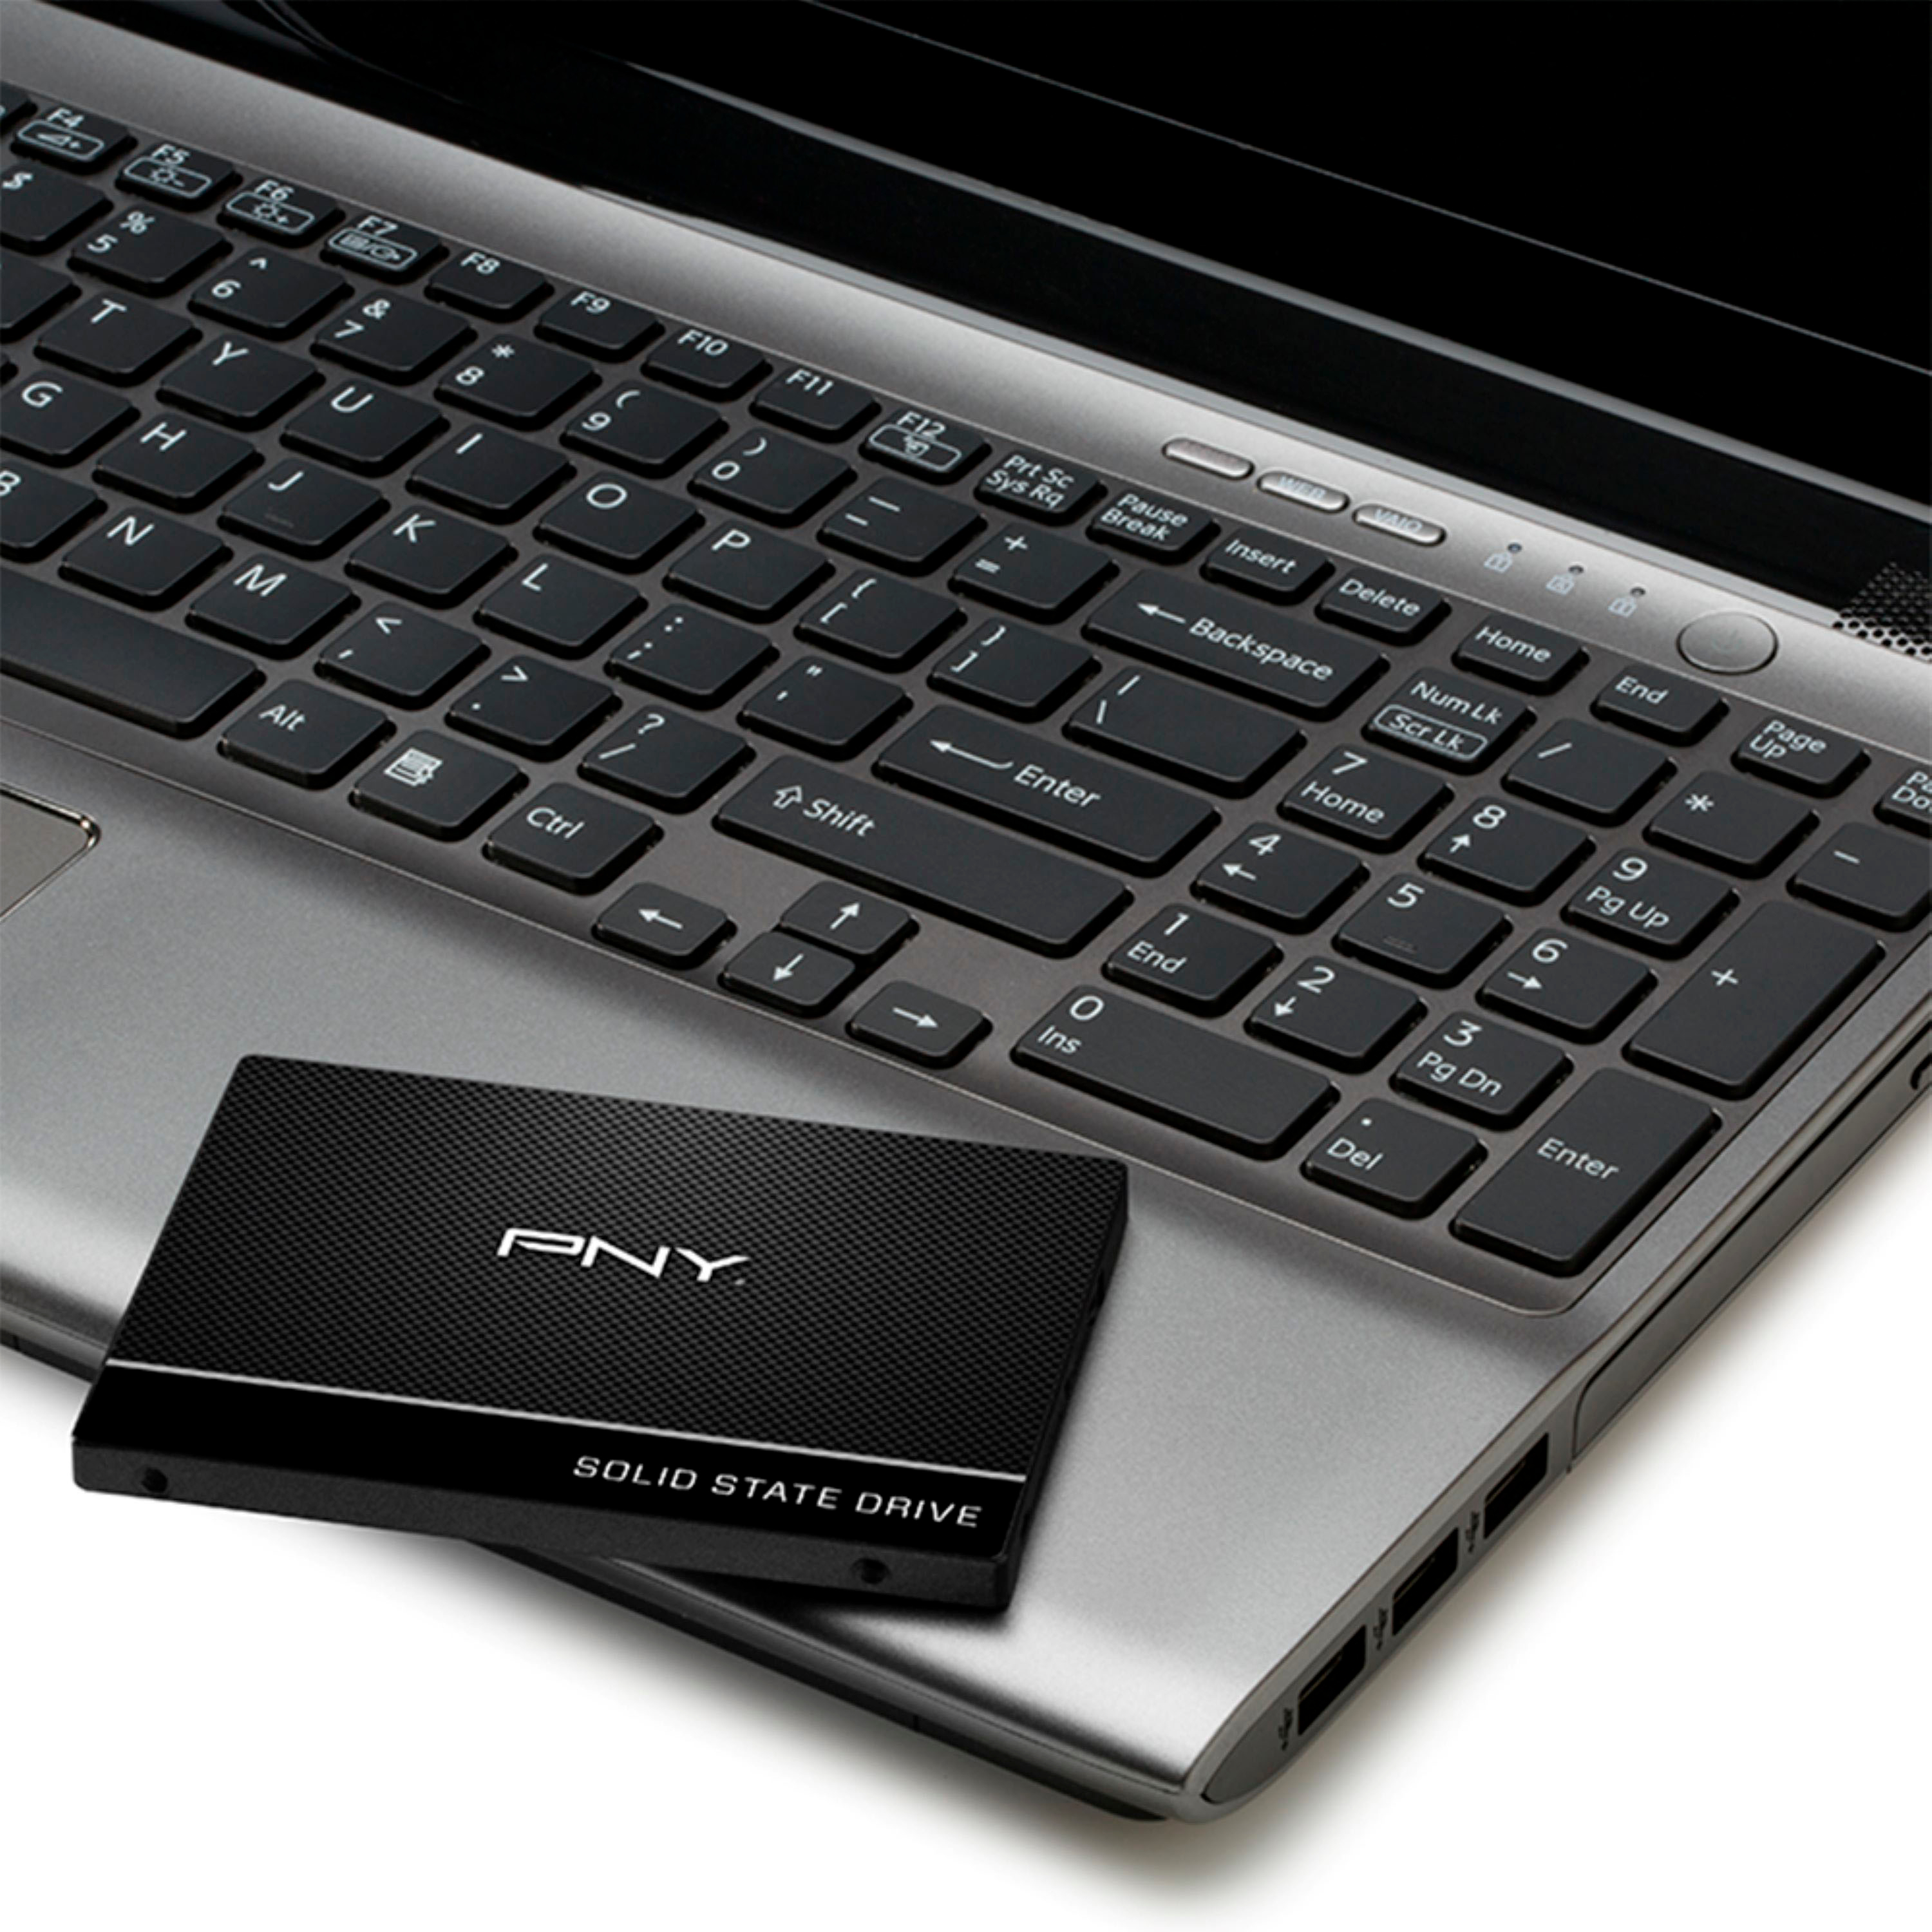 Genuine OEM PNY 1TB Portable SSD Upgrade Kit Solid State Internal